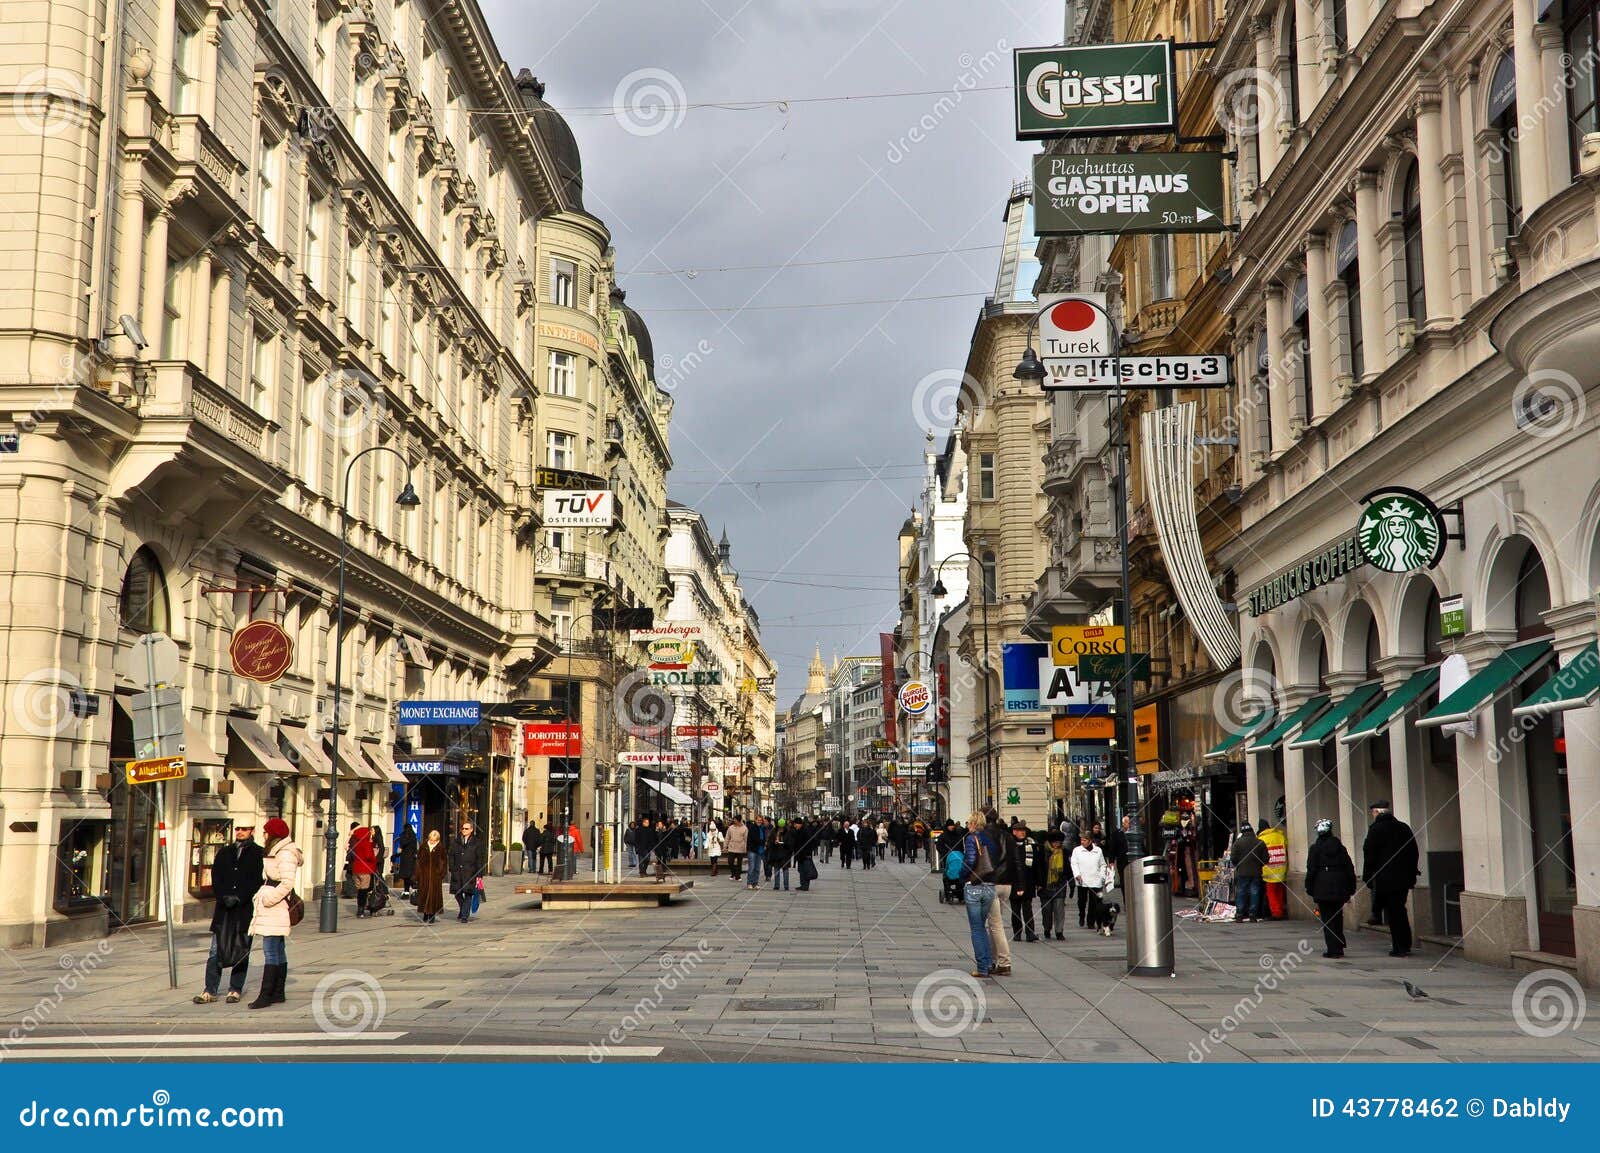 viena-pedestrian-street-vienna-austria-january-main-central-vienna-dominated-centre-vienna-packed-tourists-43778462.jpg